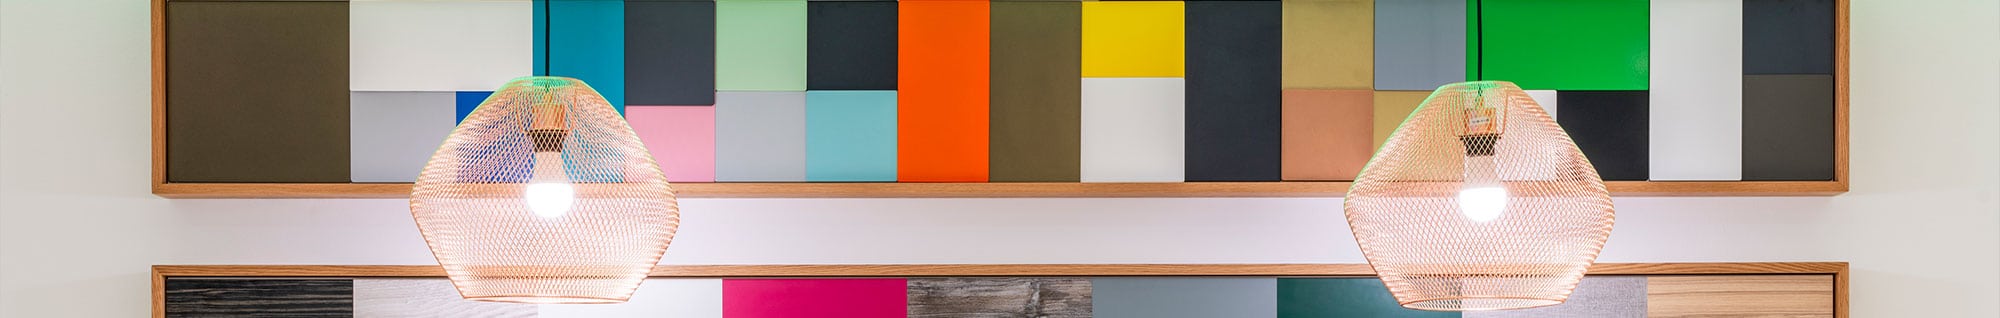 Lyra Copper Mesh Pendants Featured in Luxury Office Furniture Showroom